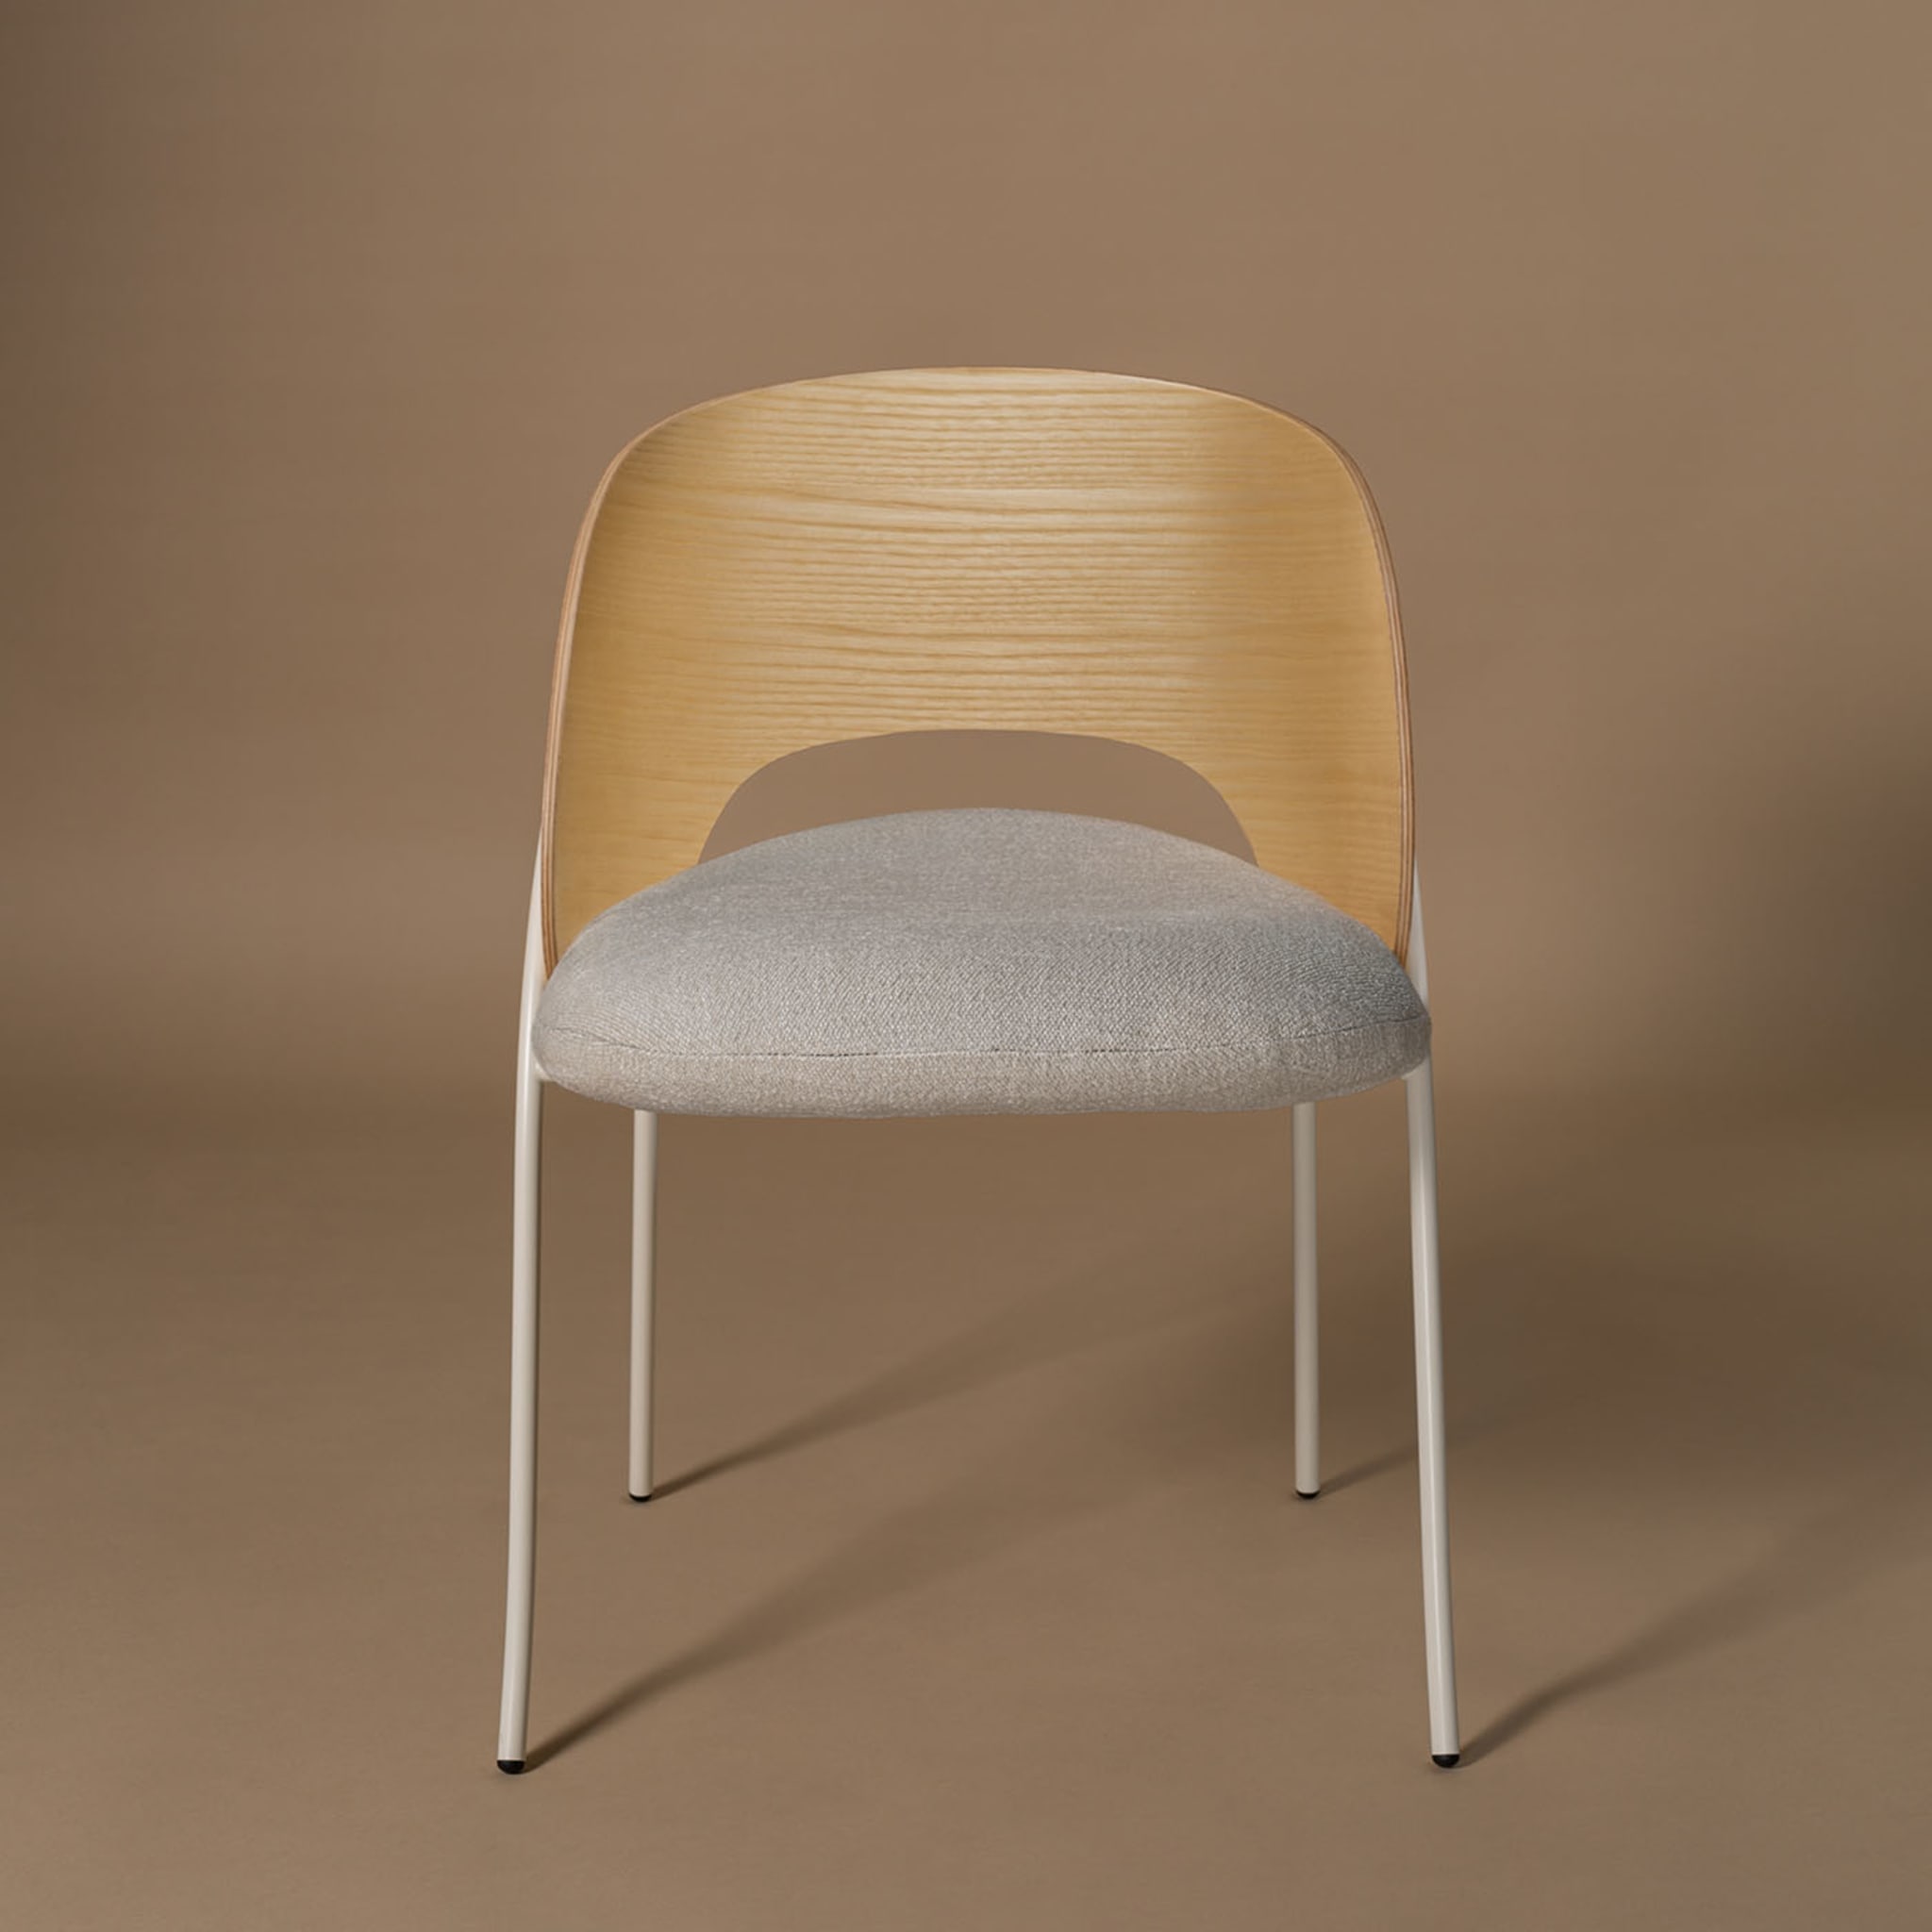 Hagu Chair by Ed Ng, AB Concept - Alternative view 1